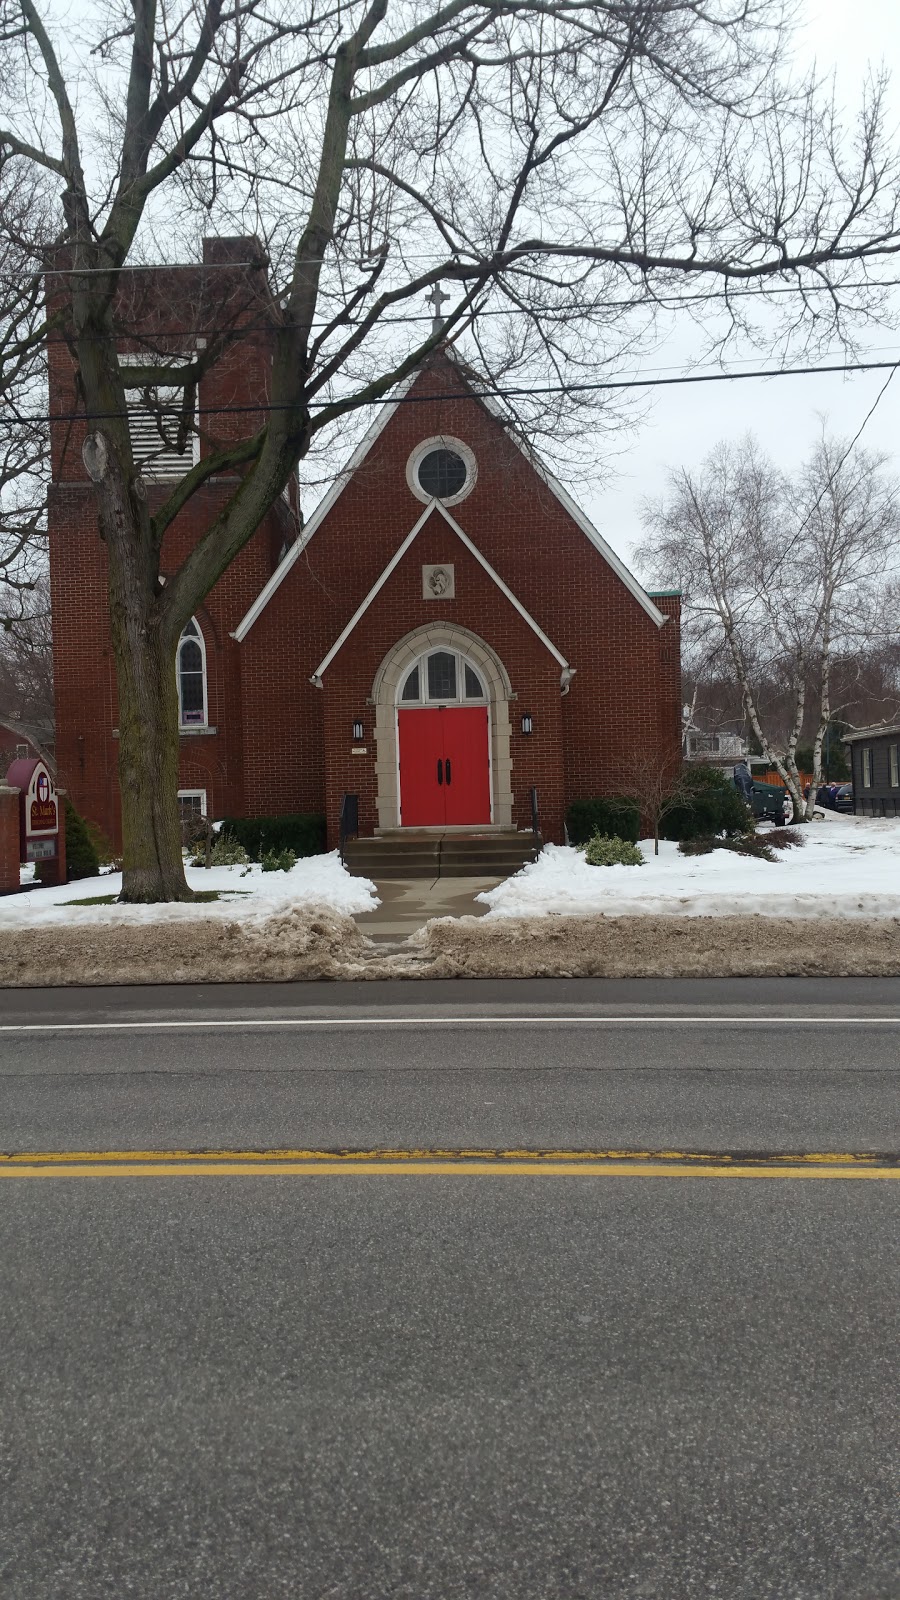 St Marks Episcopal Church | 6595 E Quaker St, Orchard Park, NY 14127, USA | Phone: (716) 662-4418